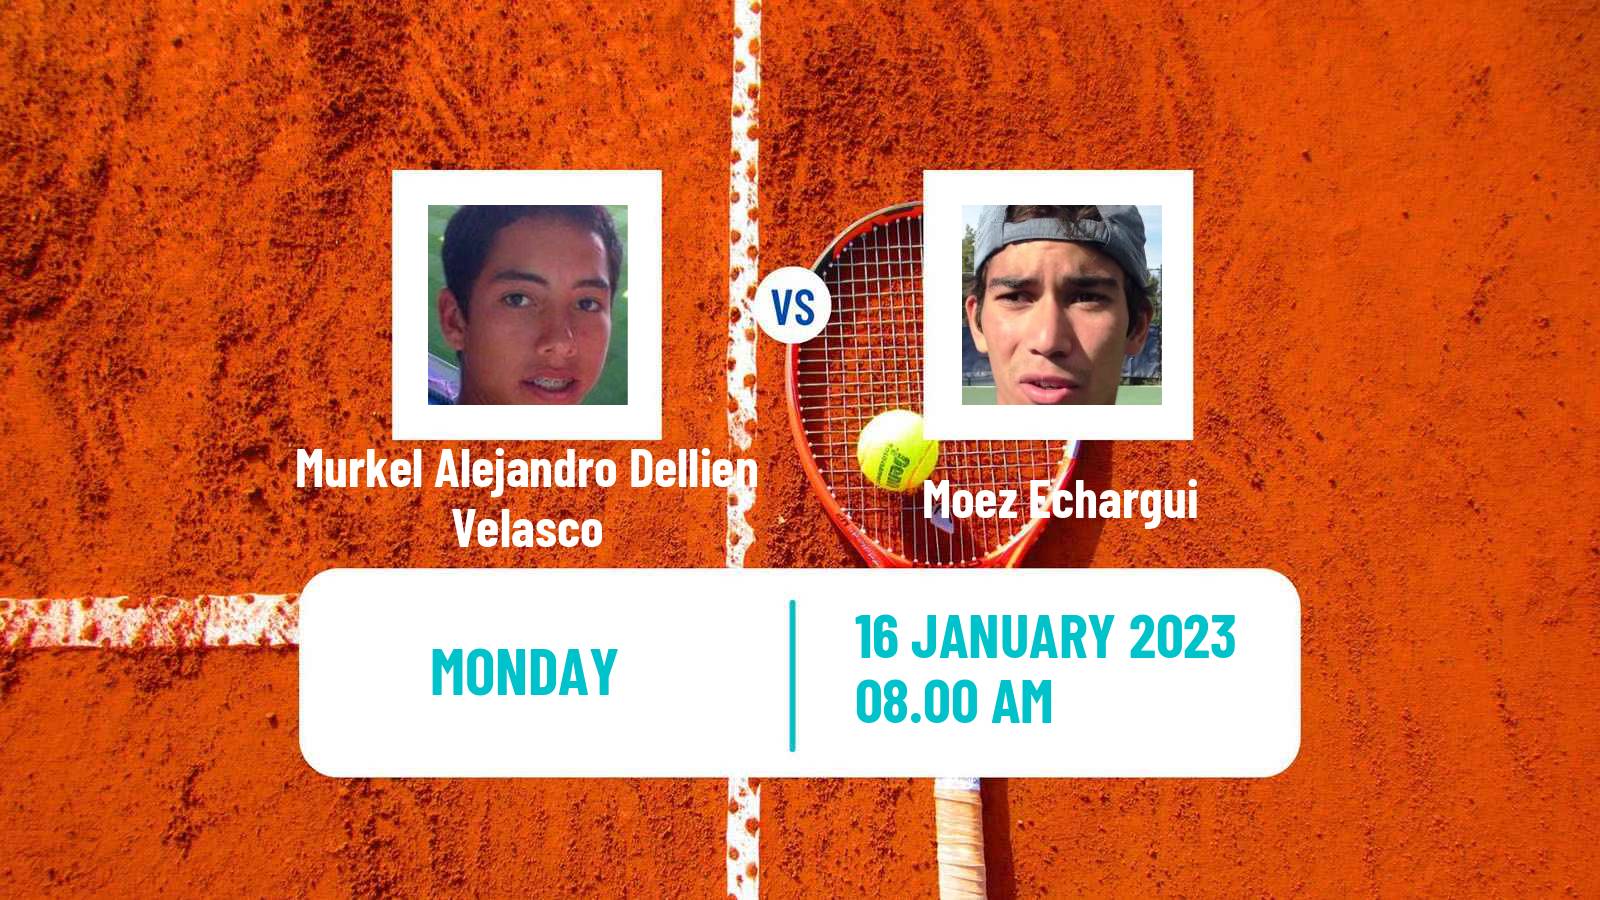 Tennis ATP Challenger Murkel Alejandro Dellien Velasco - Moez Echargui